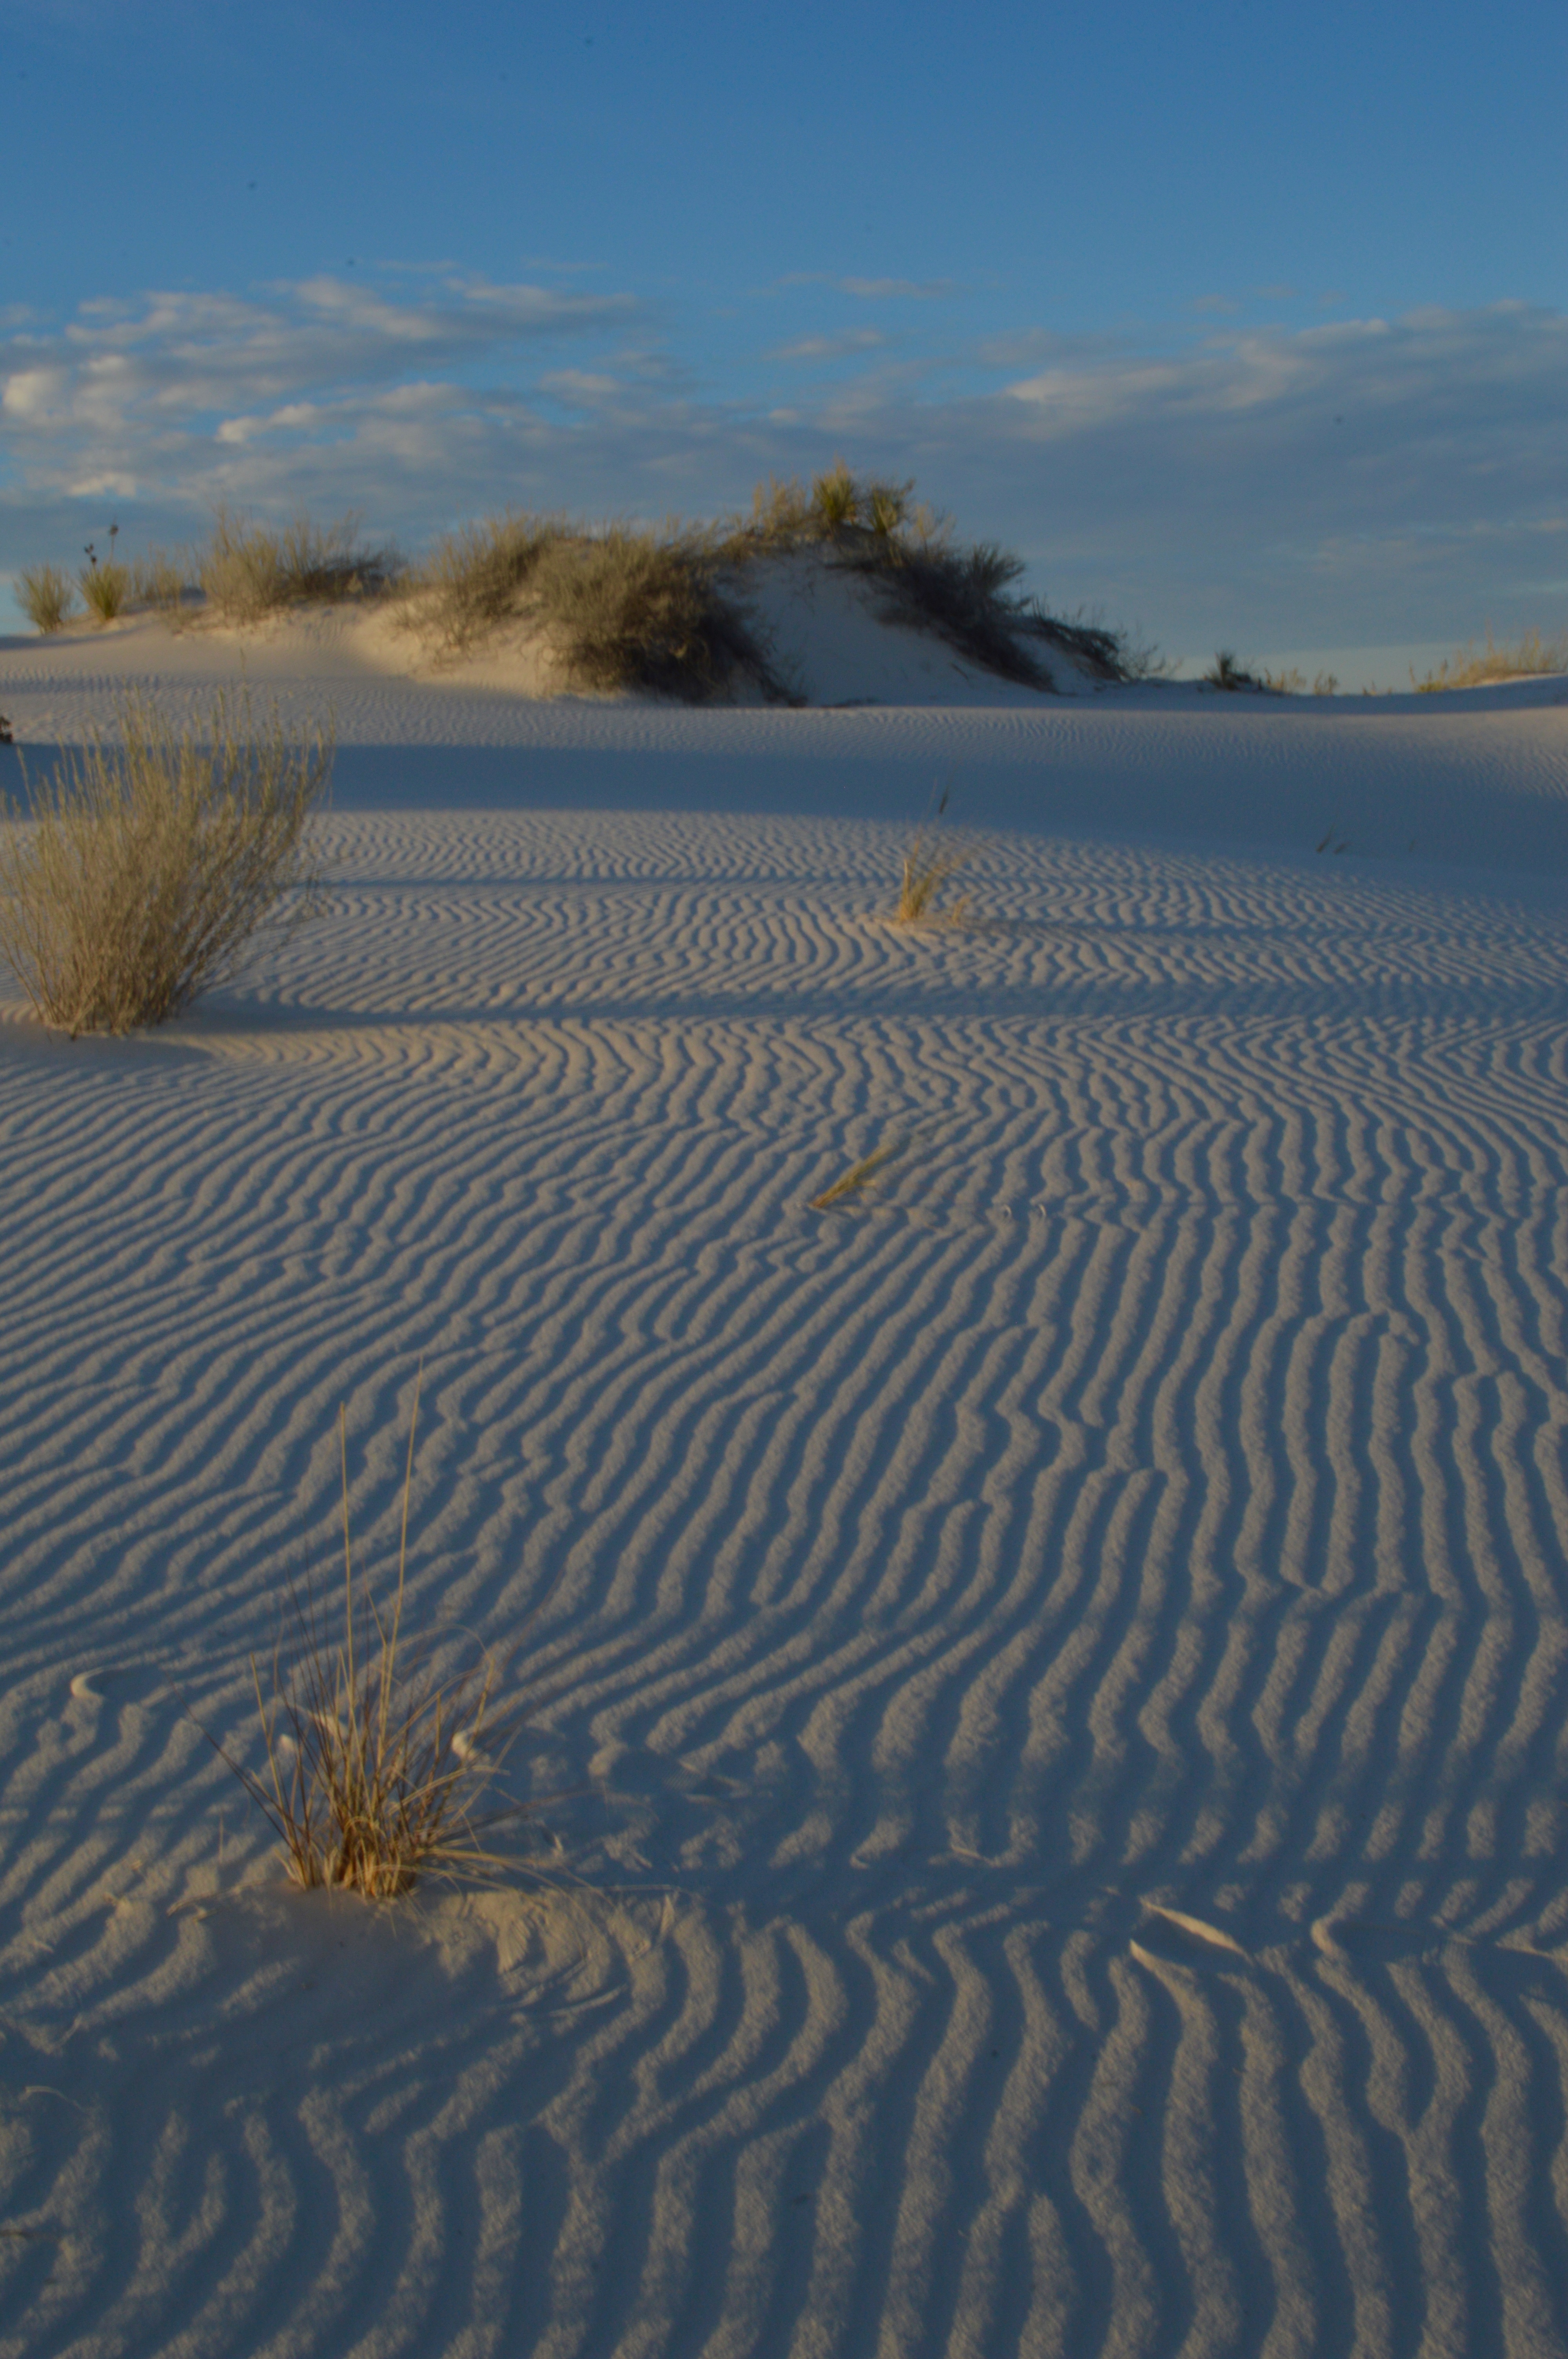 Desert Dunes in New Mexico